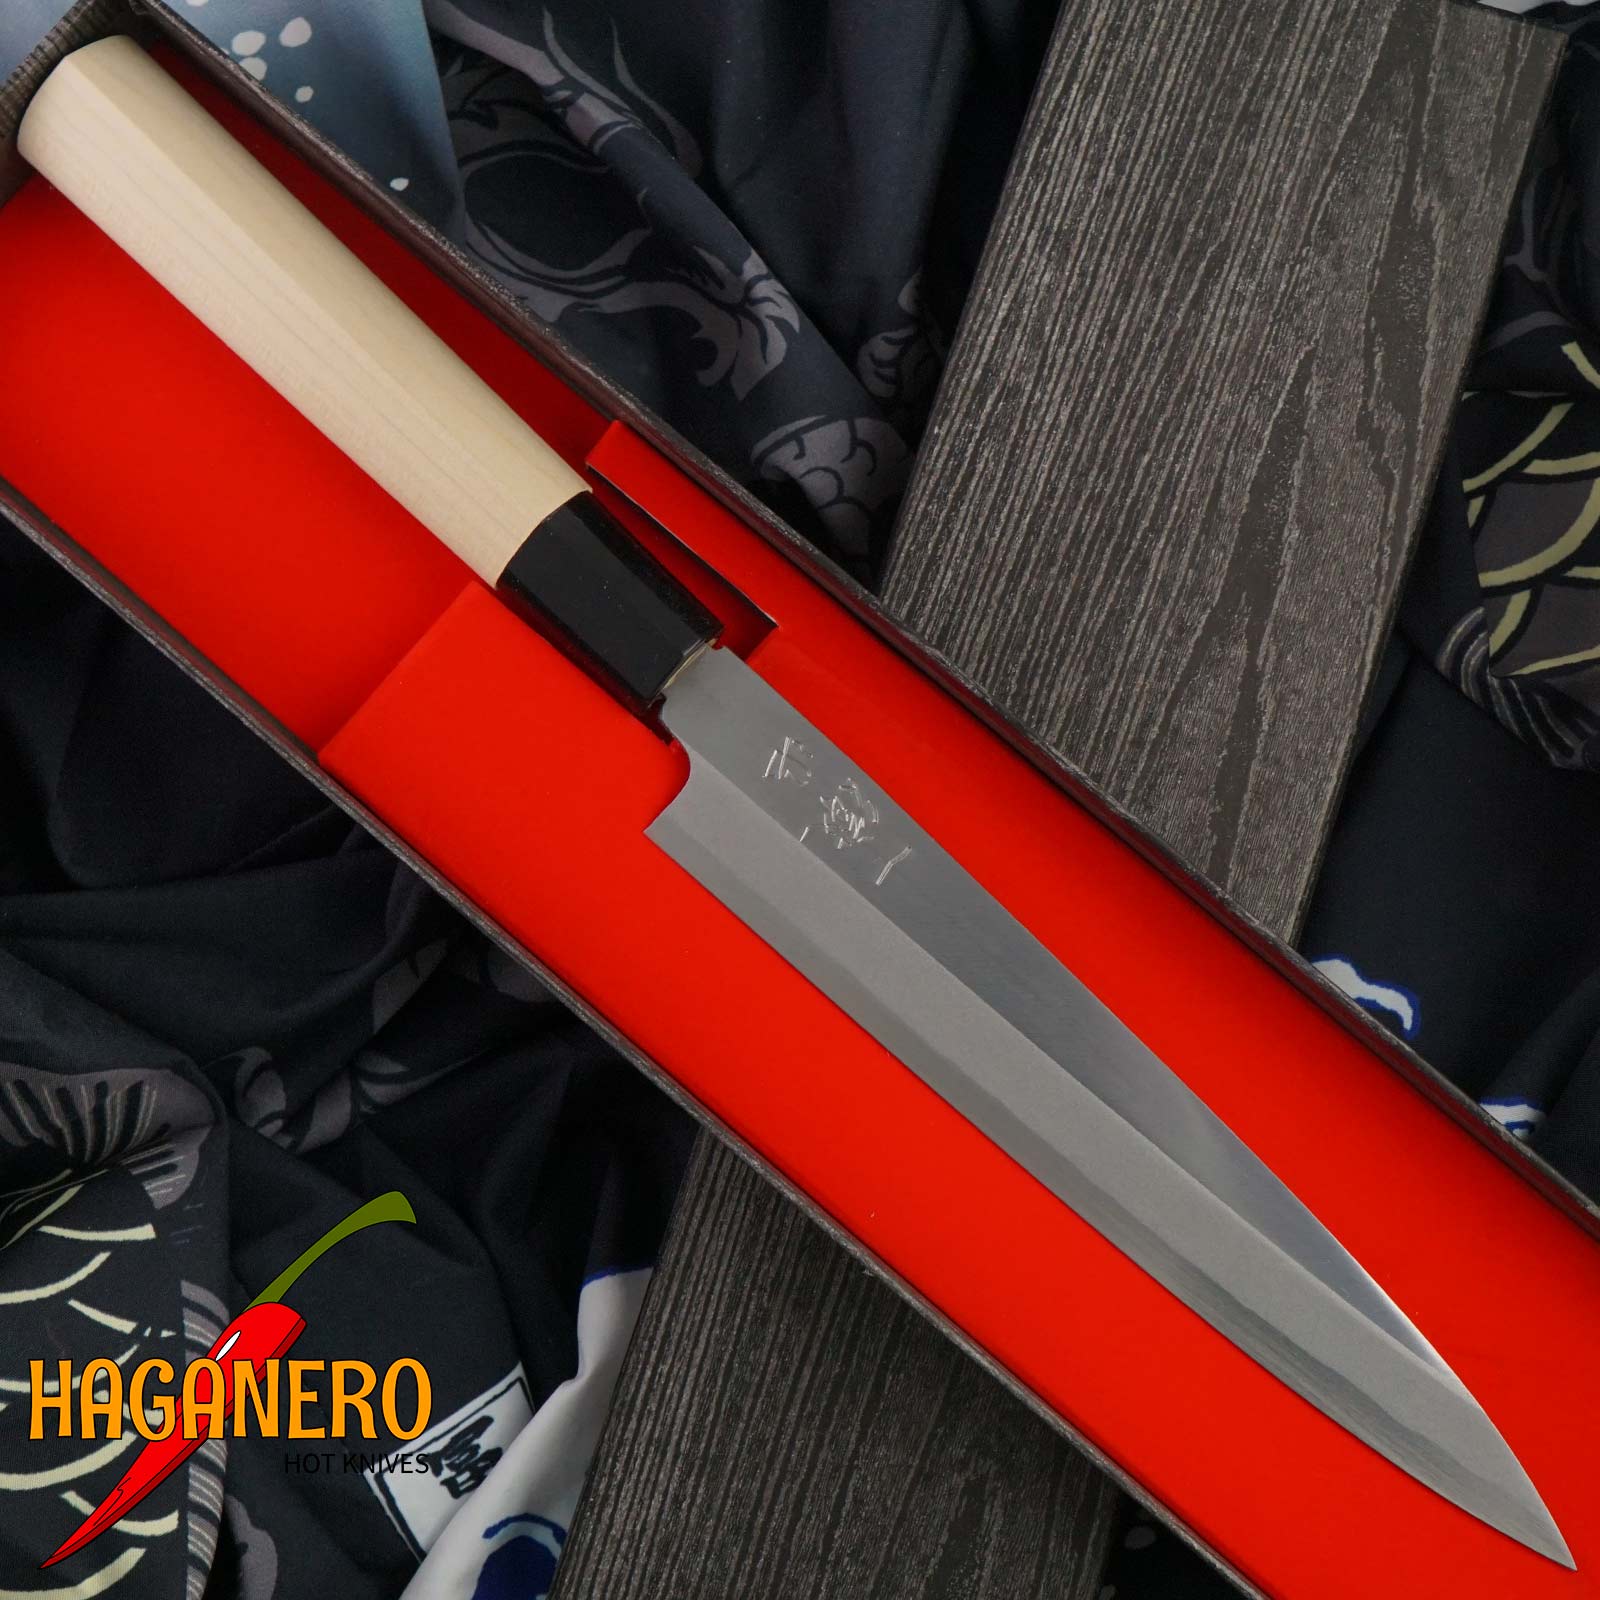 Yanagiba Japanese kitchen knife Ittetsu Forge-welded Shirogami 2 IJF-11122 18cm